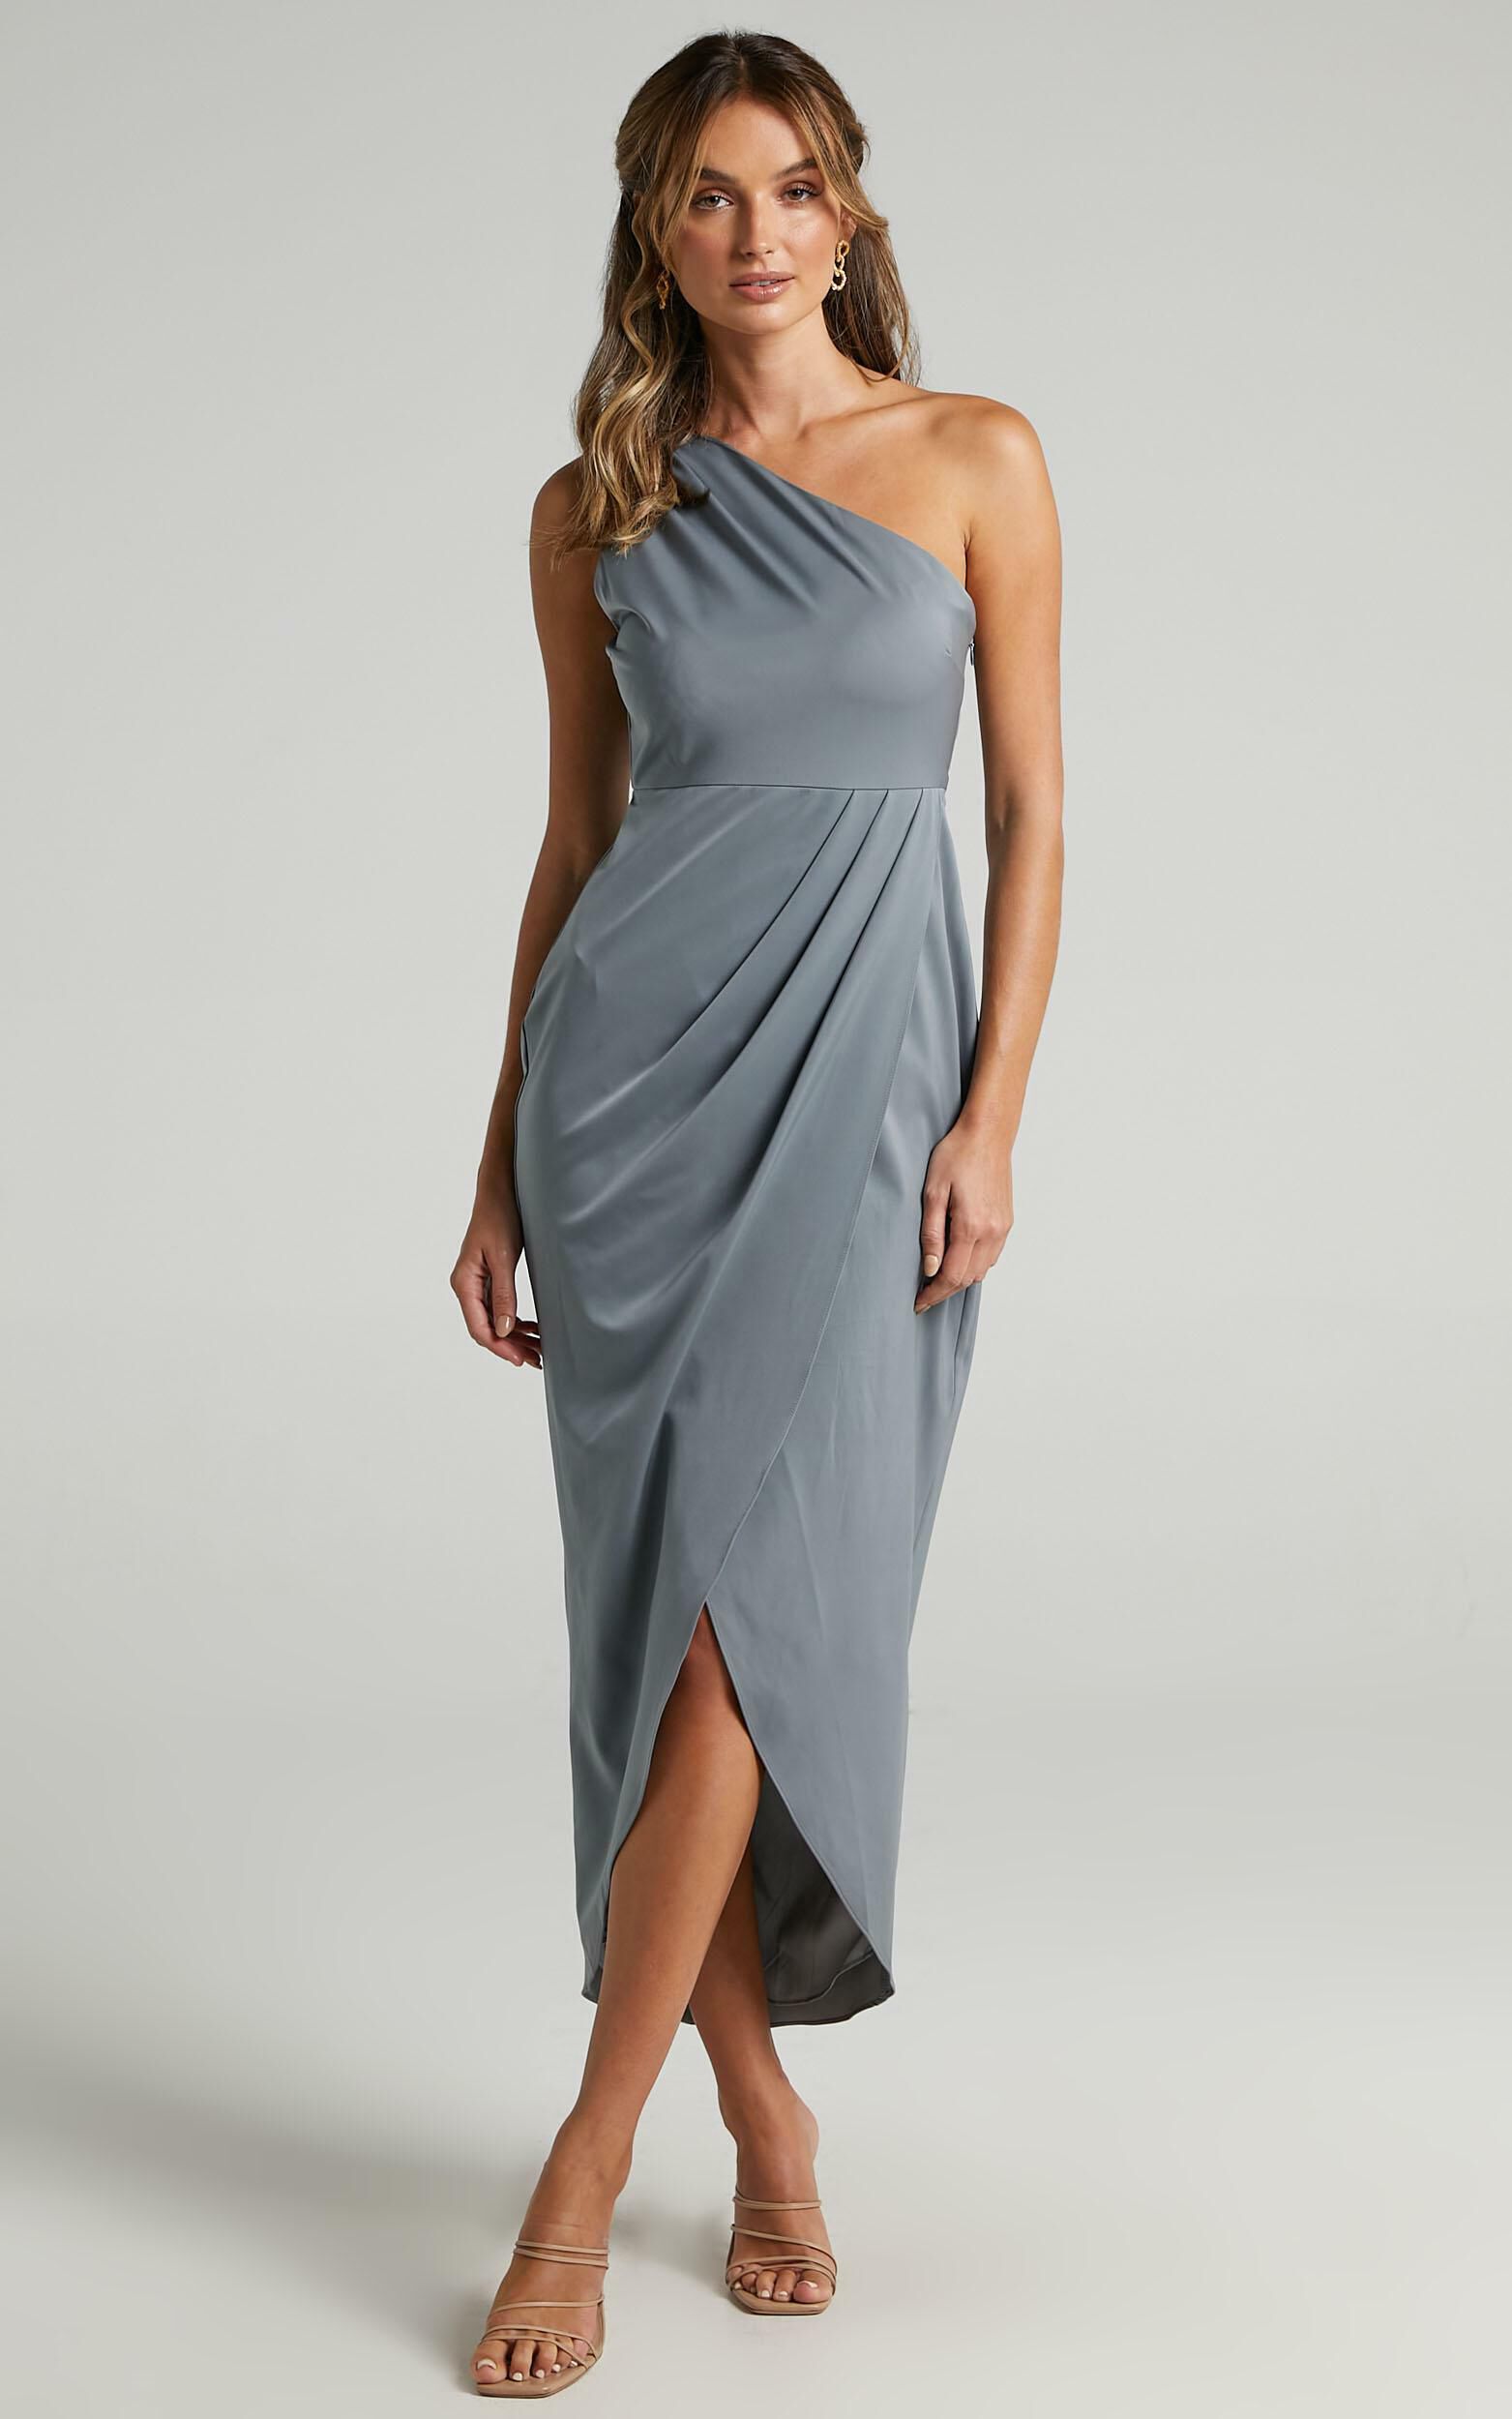 Felt So Happy Midaxi Dress - One Shoulder Drape Dress in Grey - 20, BLU3